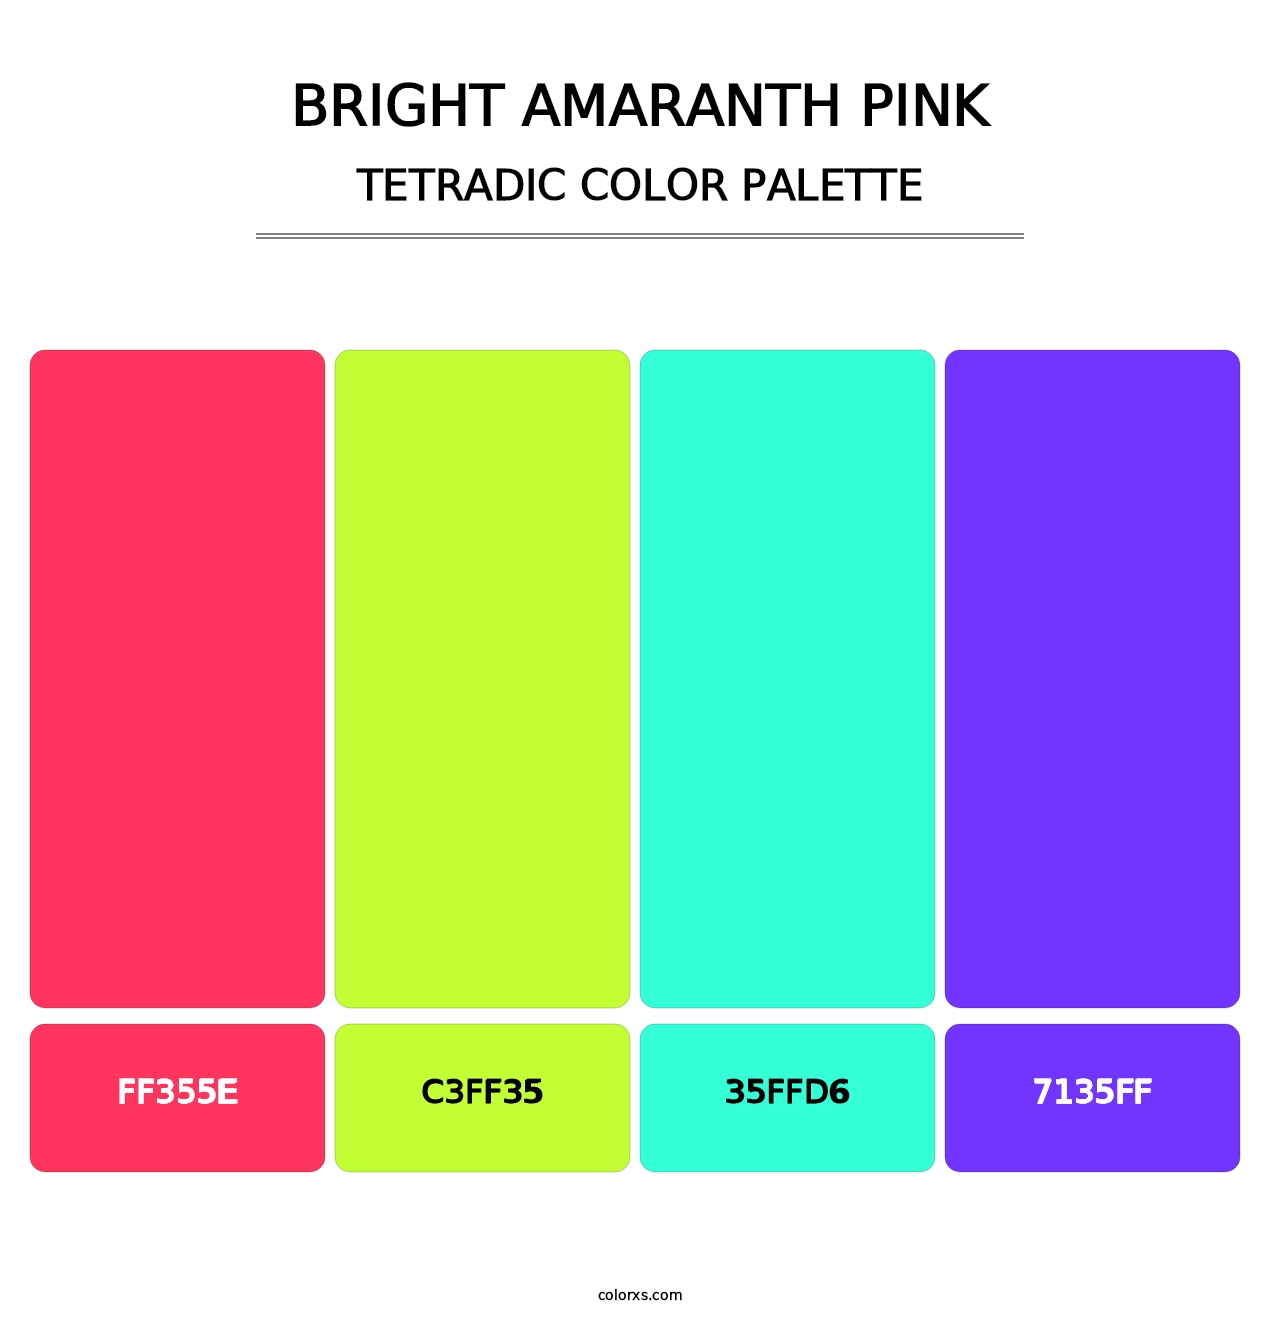 Bright Amaranth Pink - Tetradic Color Palette